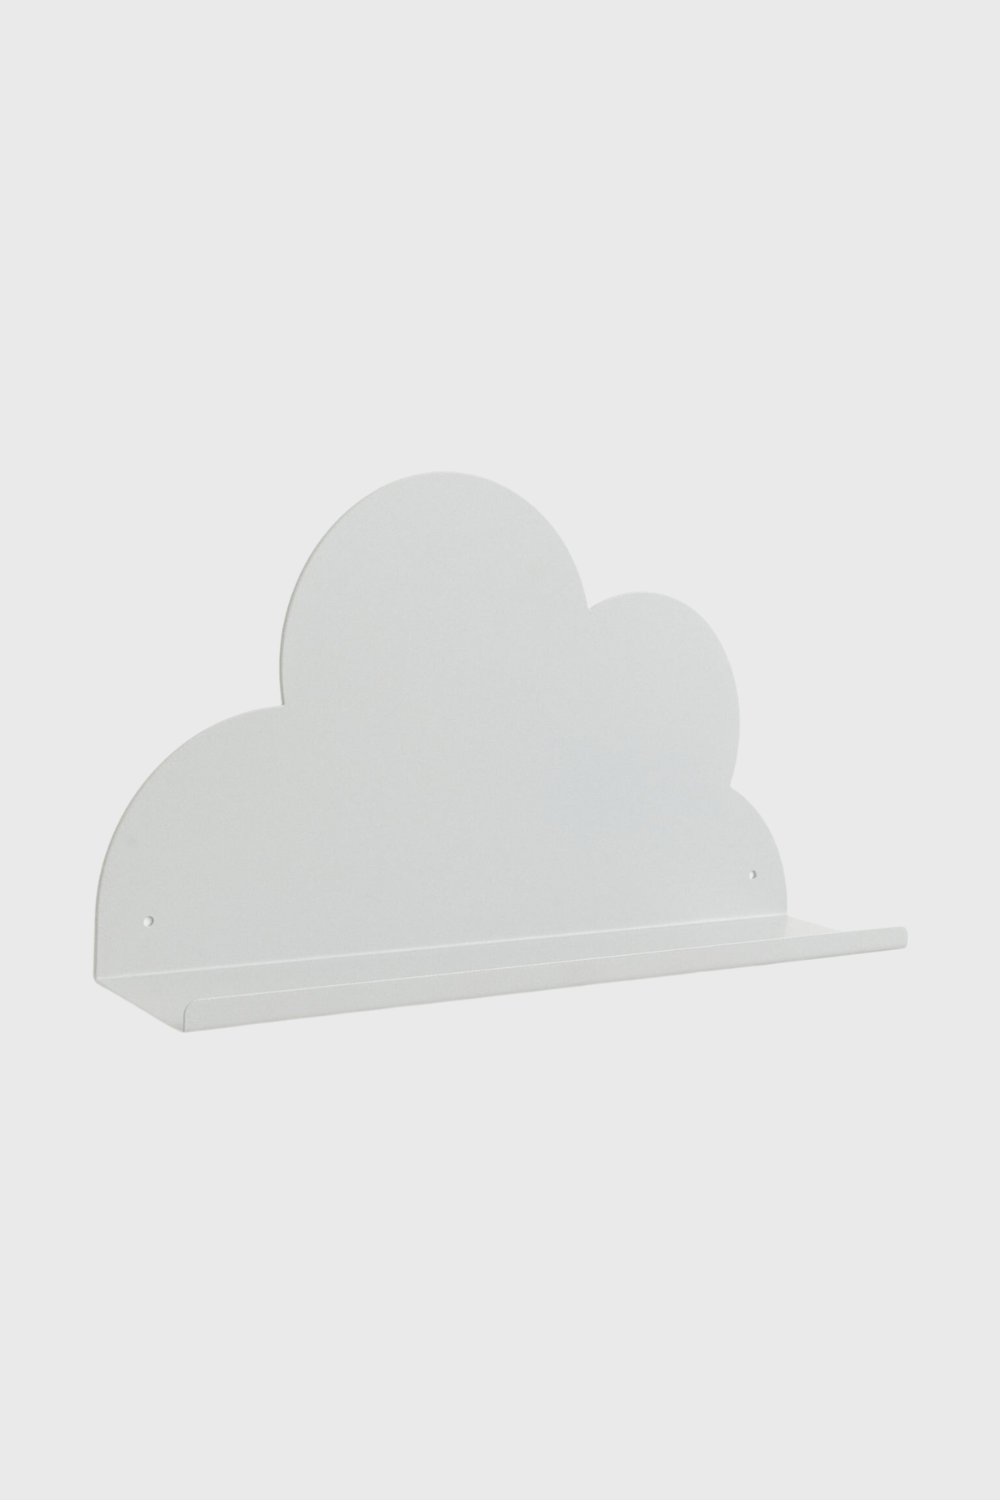 cloud-shaped wall shelf